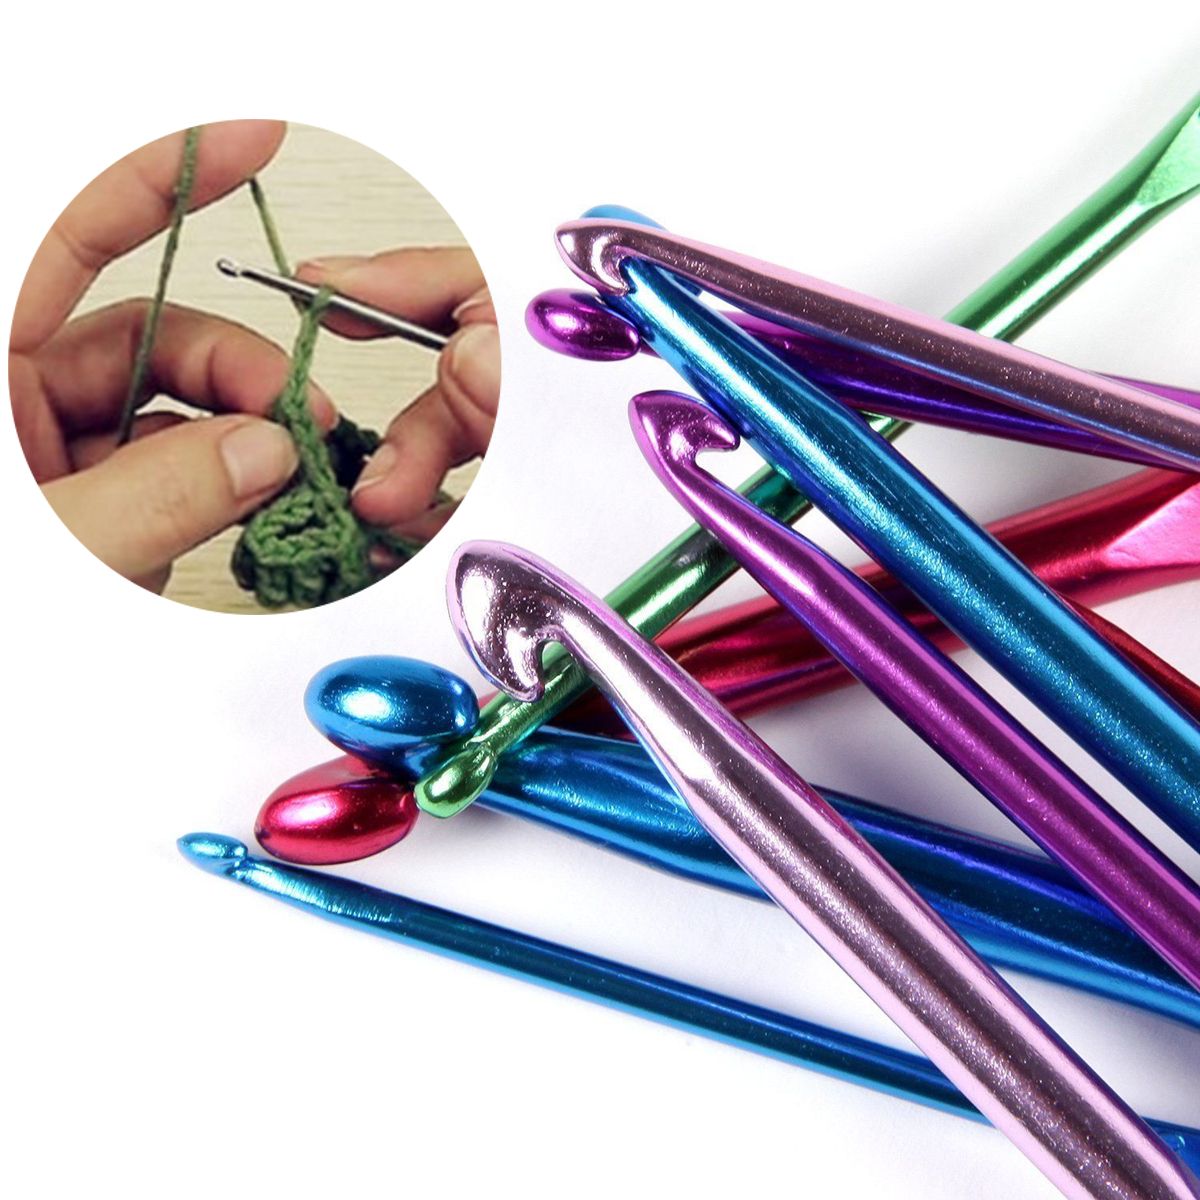 50pcs-Aluminum-Crochet-Hooks-Kit-Weave-Yarn-Knitting-Needles-Sewing-Tools-Case-1138132